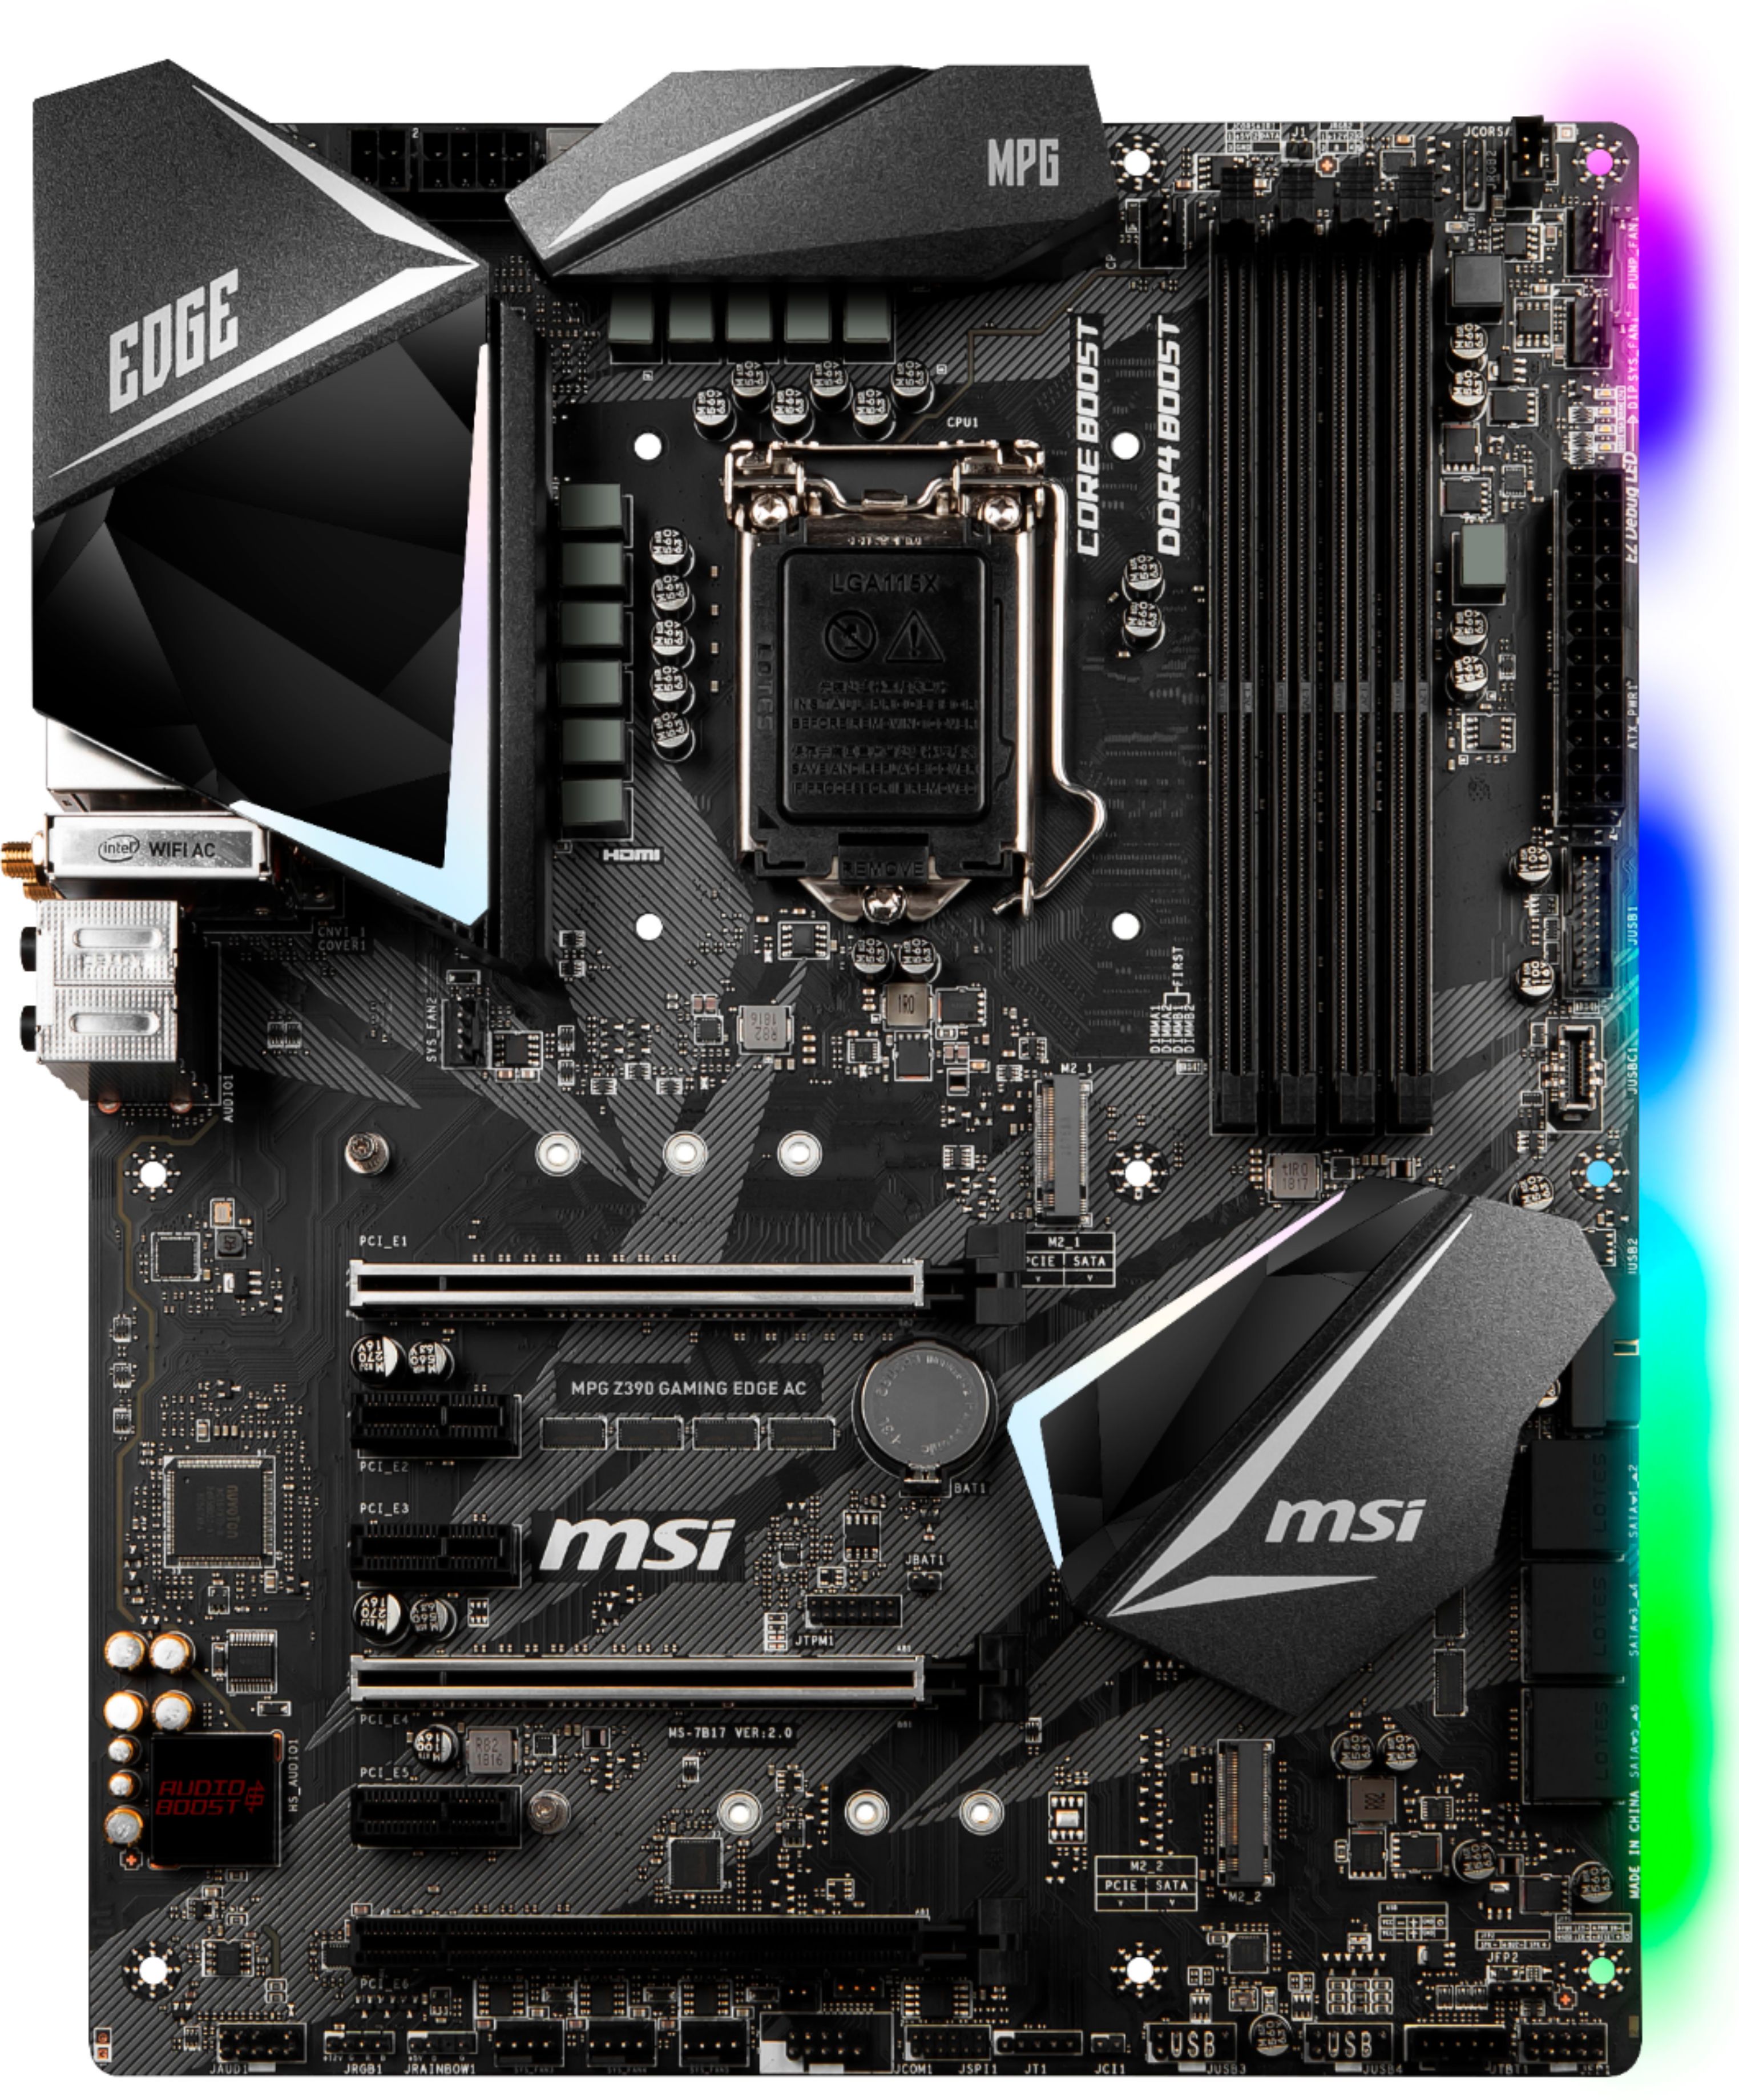 Msi Mpg Z390 Gaming Edge Ac Socket Lga1151 Usb 3 1 Gen 1 Intel Motherboard With Led Lighting Mpg Z390 Gaming Edge Ac Best Buy